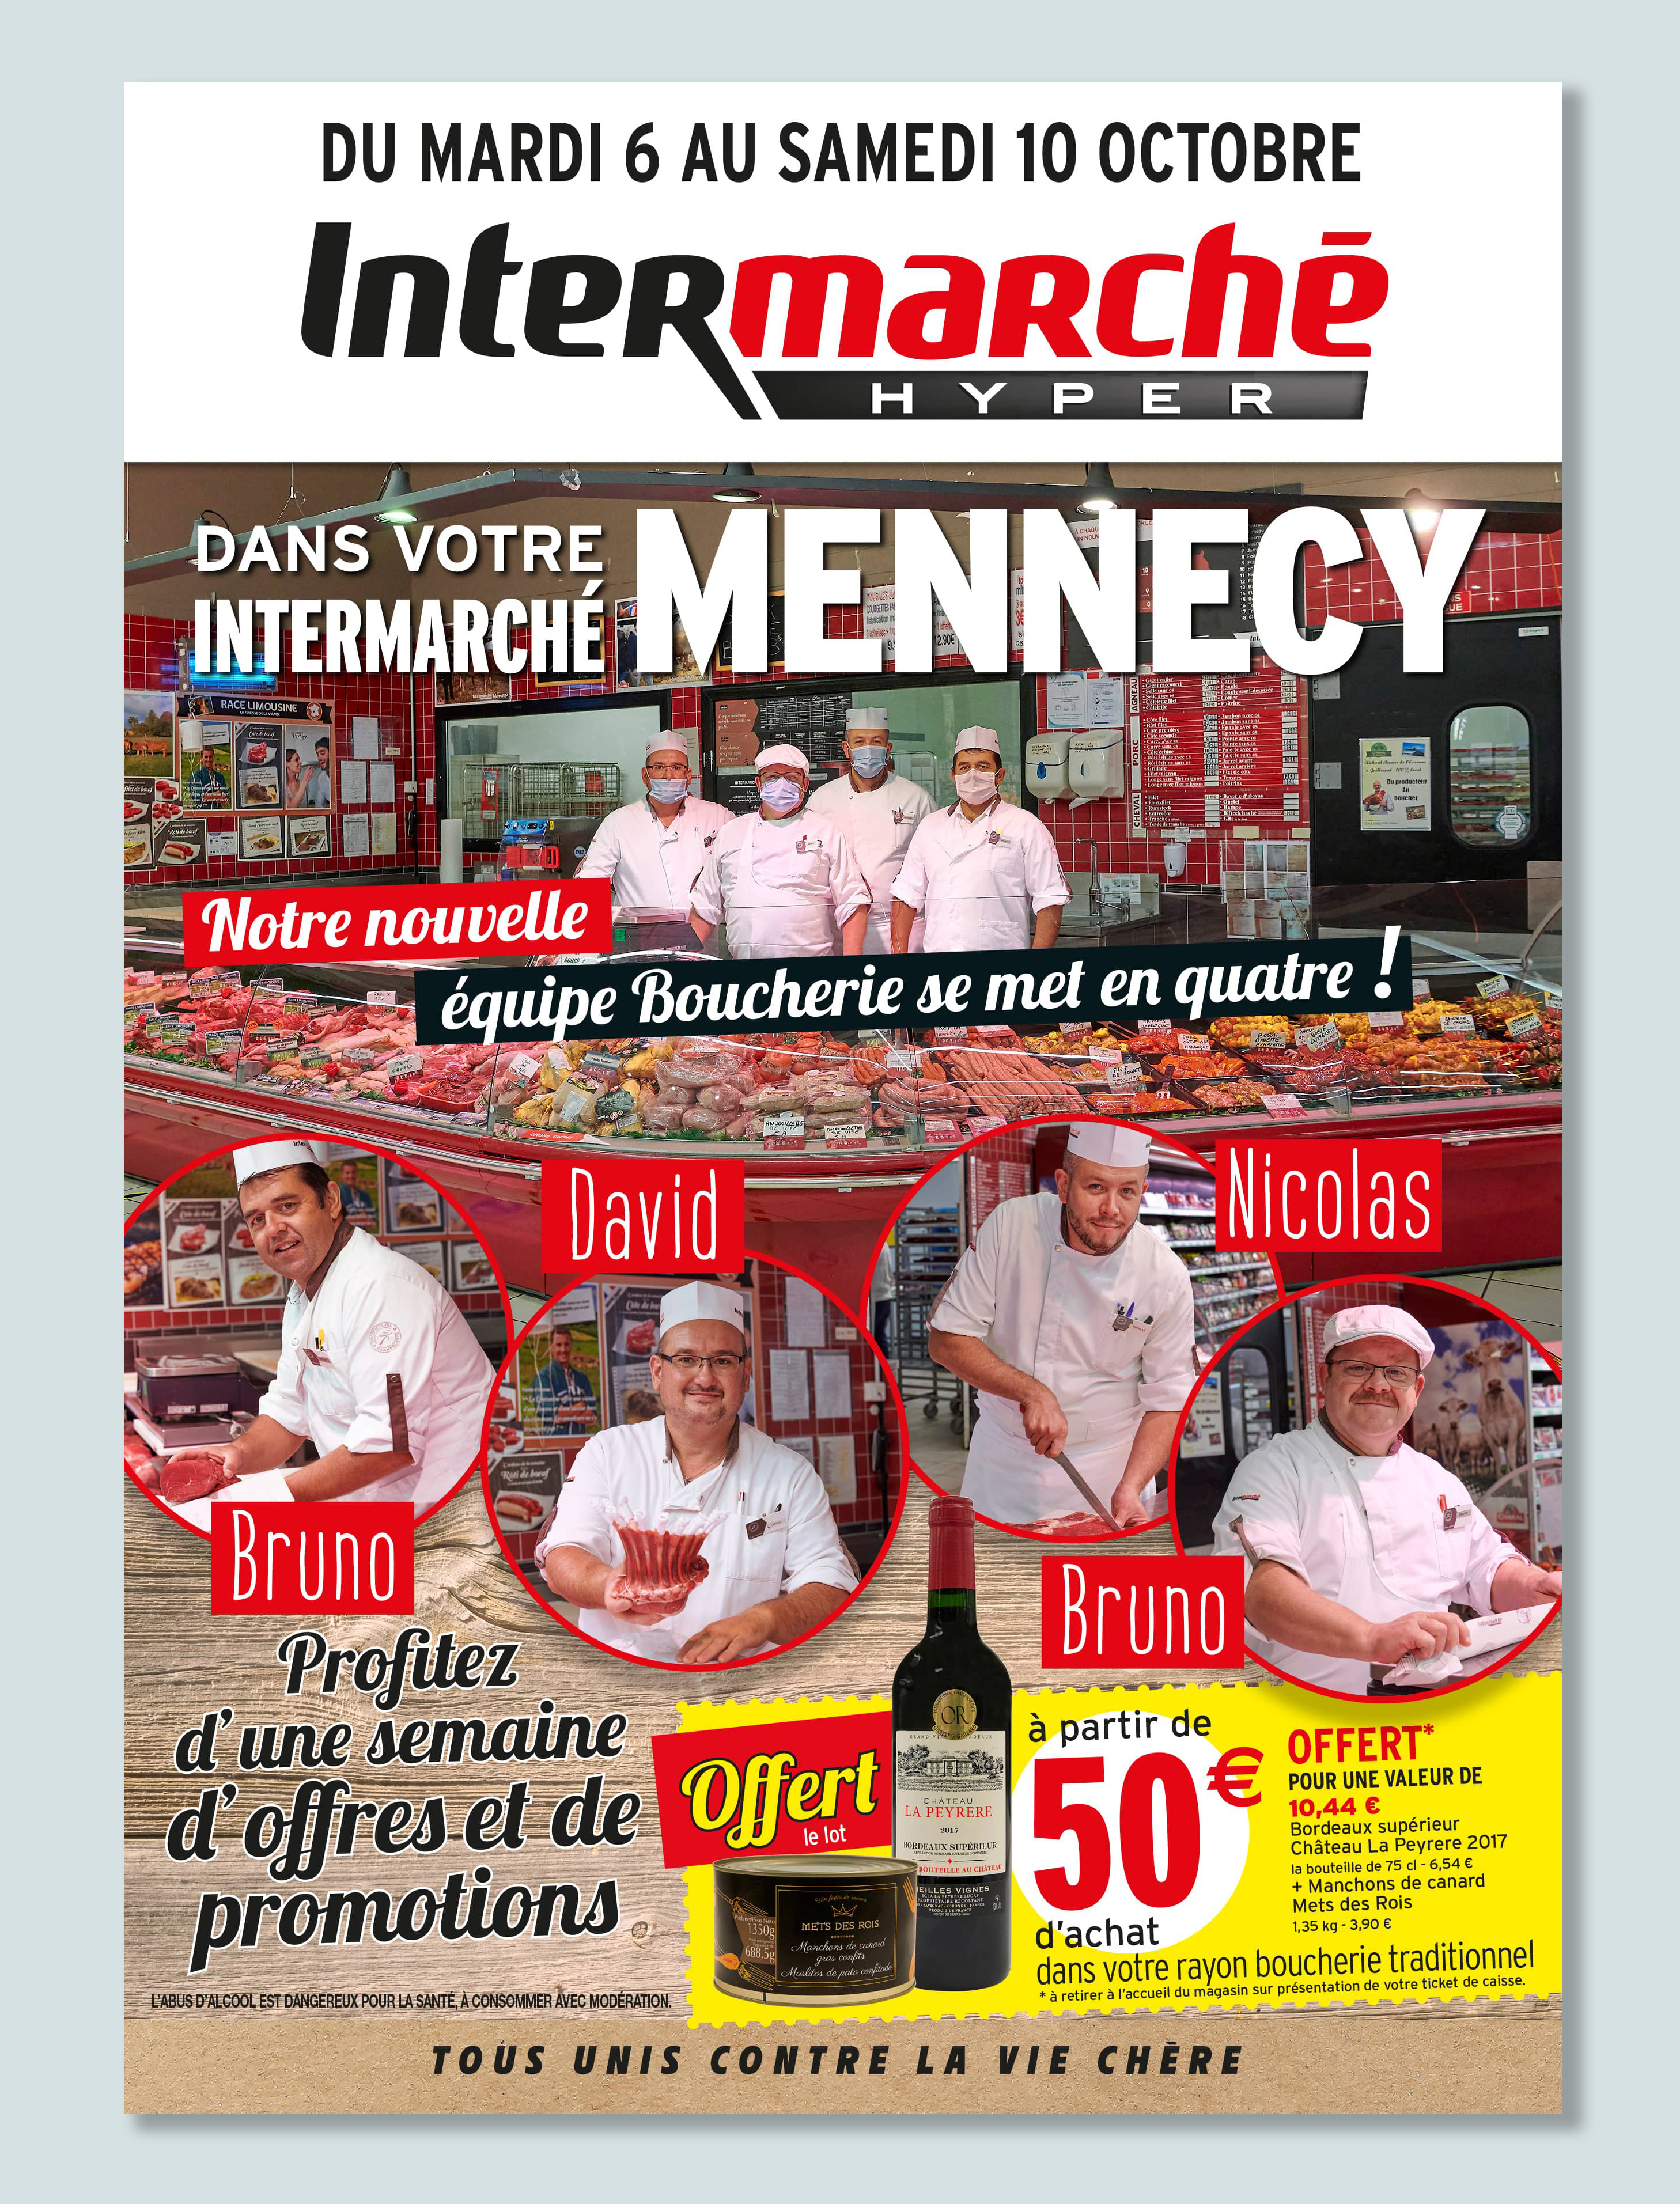 Intermarché Mennecy